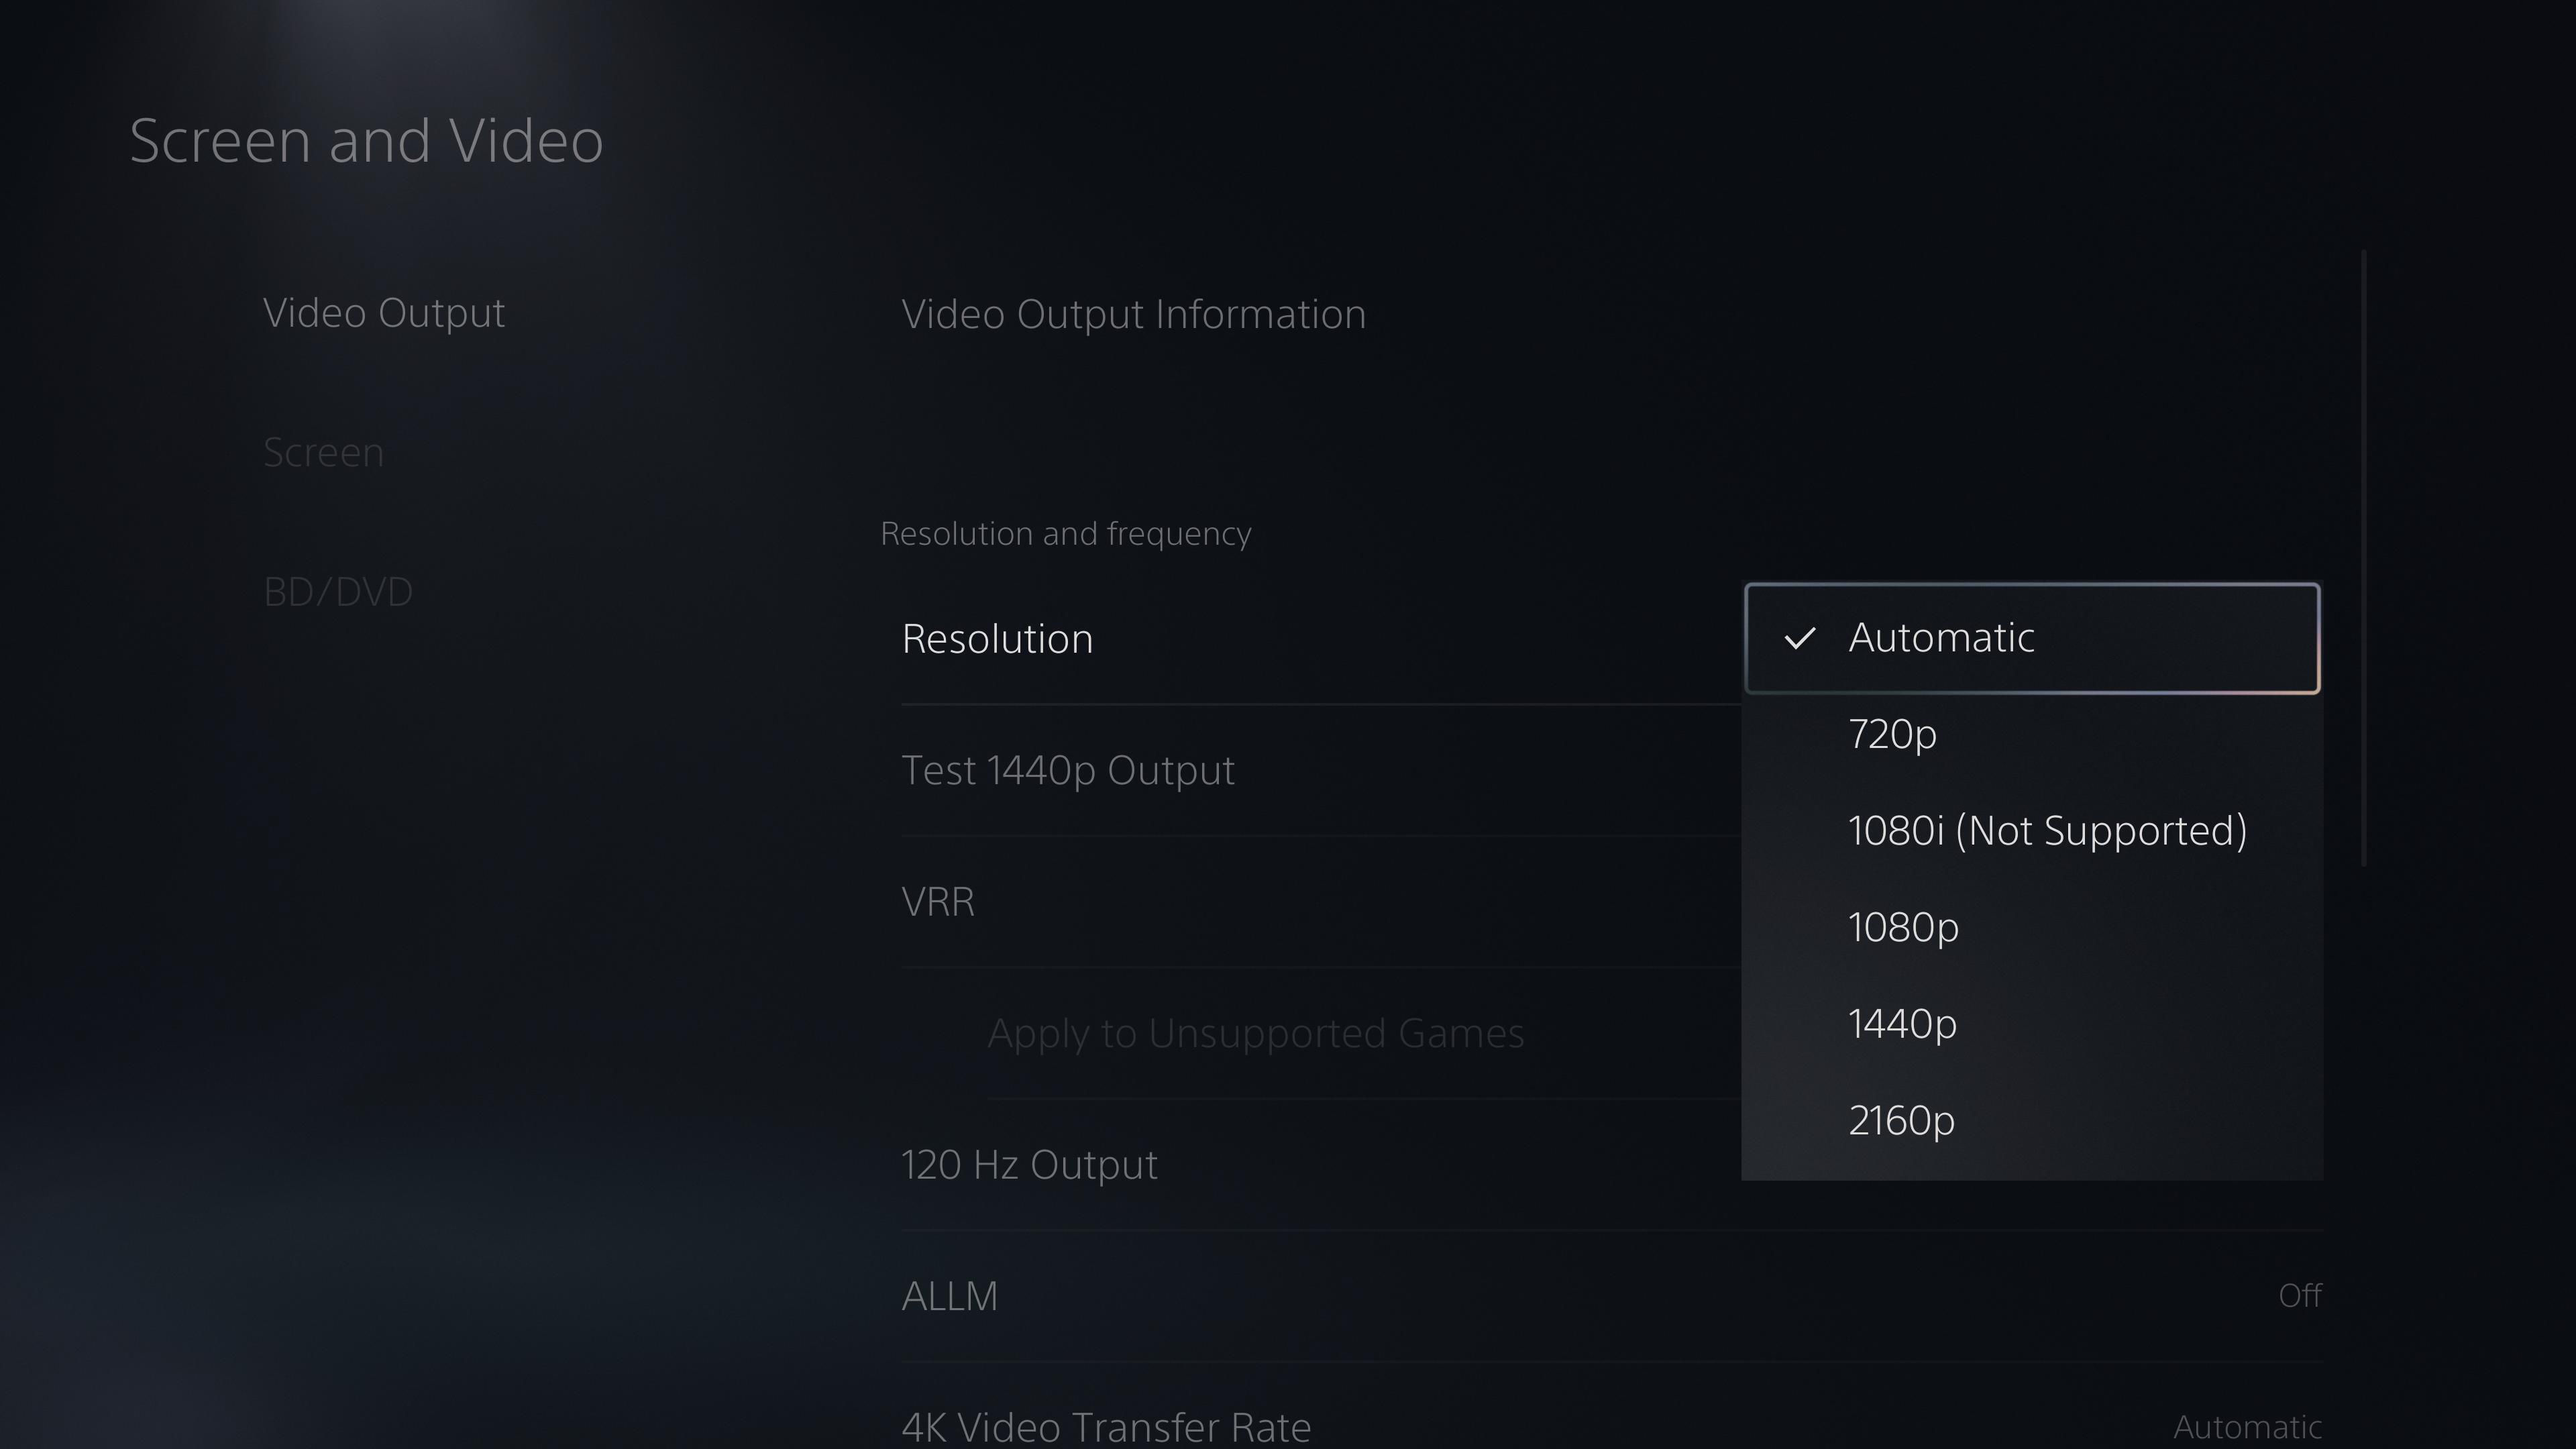 PS5 Display Resolutions, 4K, HDMI 2.1, and HDMI 2.0